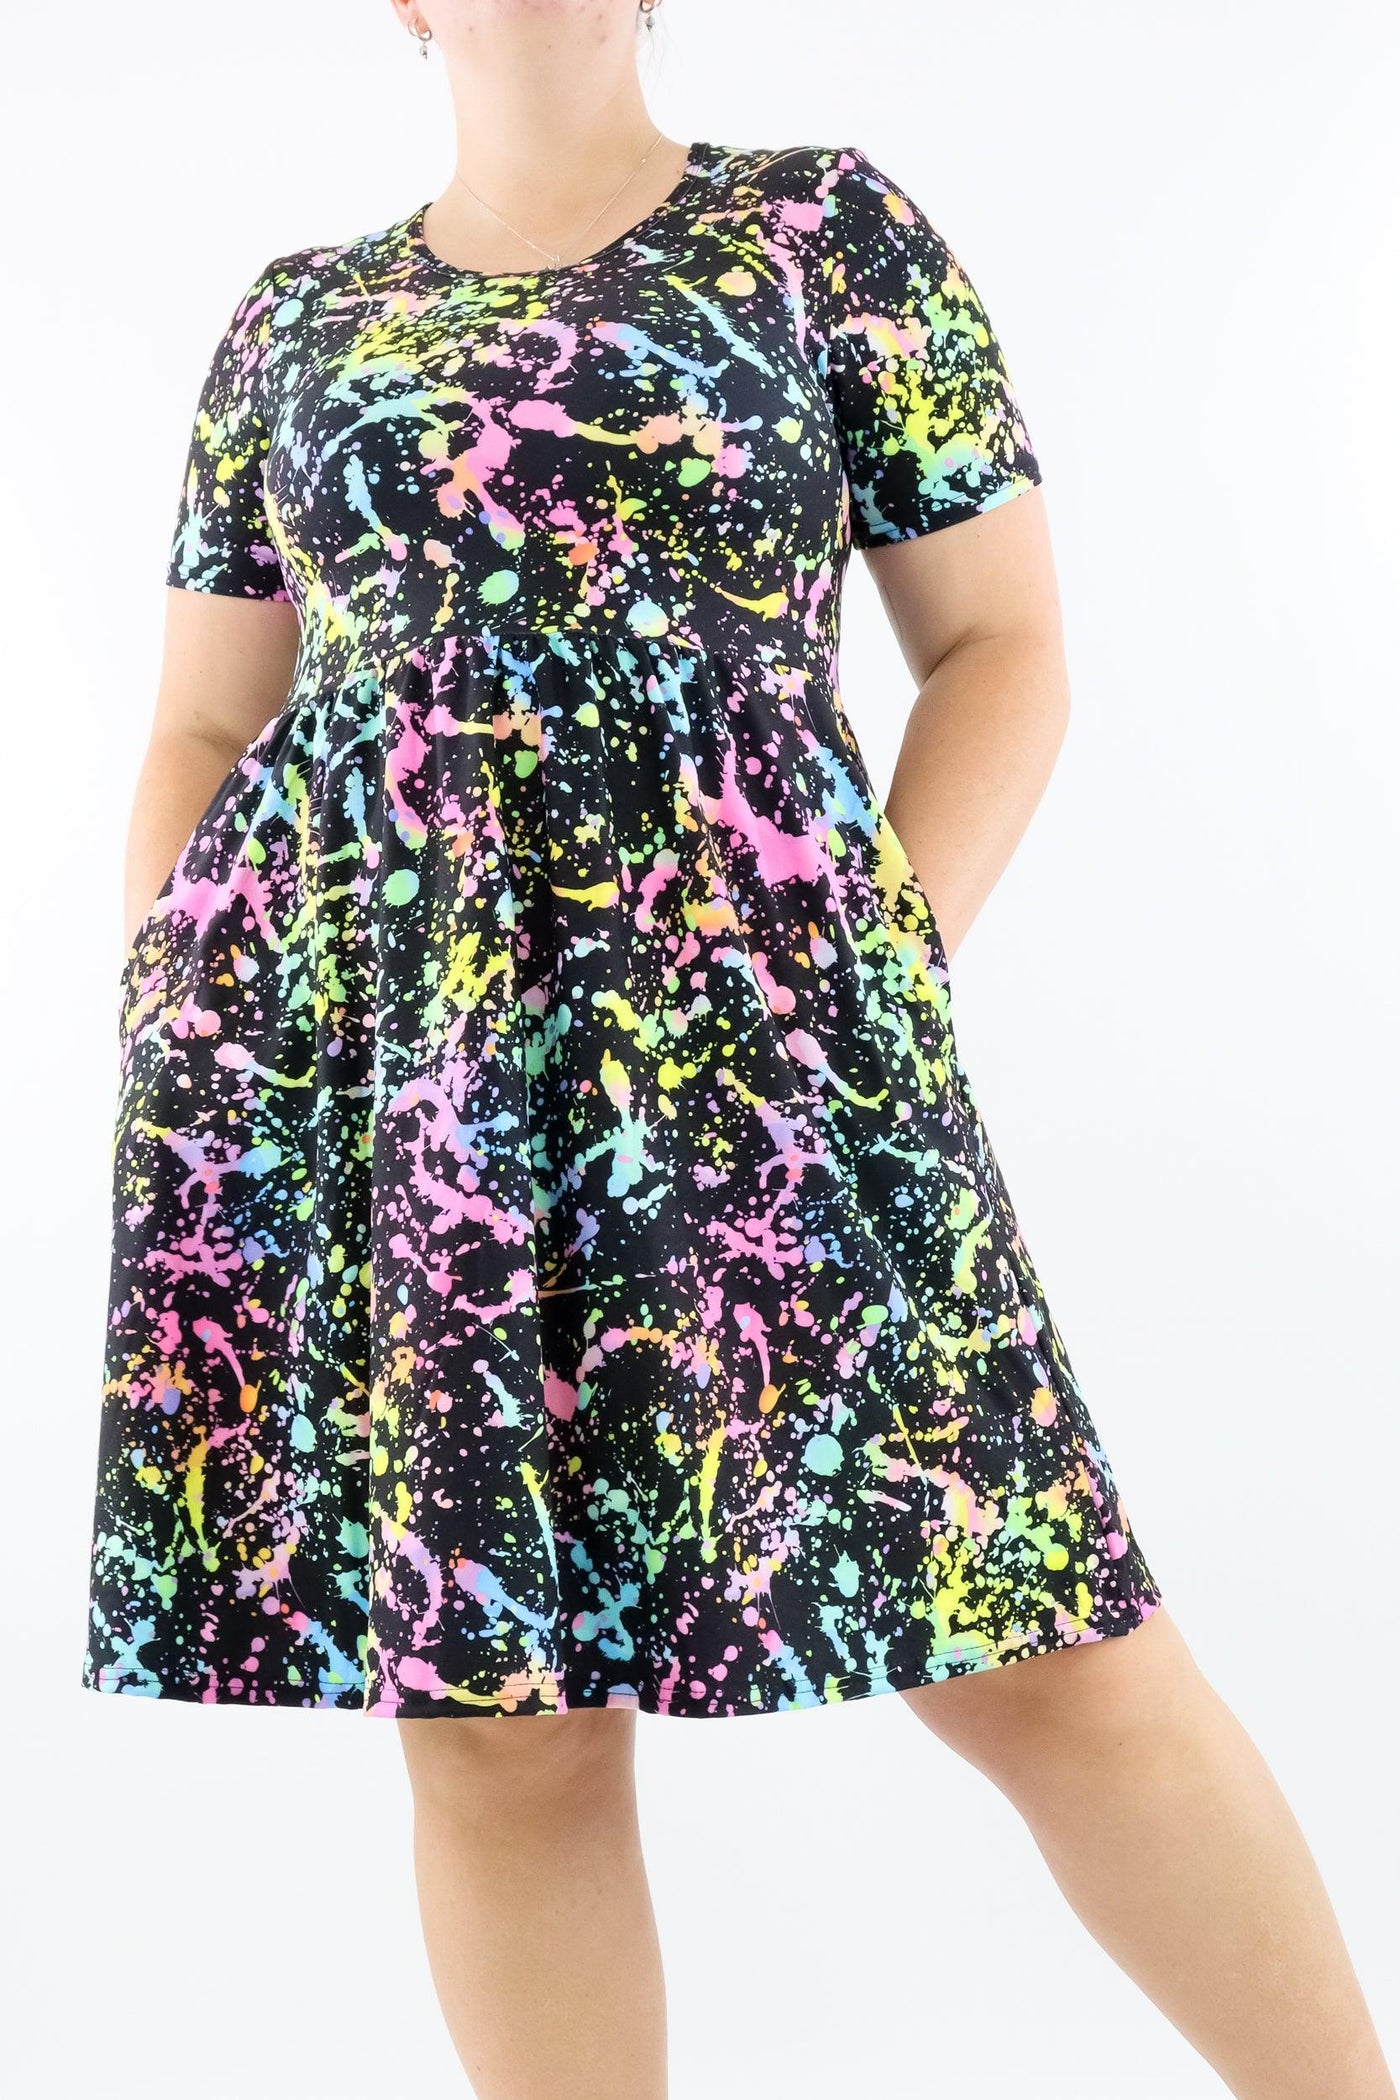 Neon Splash - Short Sleeve Skater Dress - Knee Length - Side Pockets - Pawlie